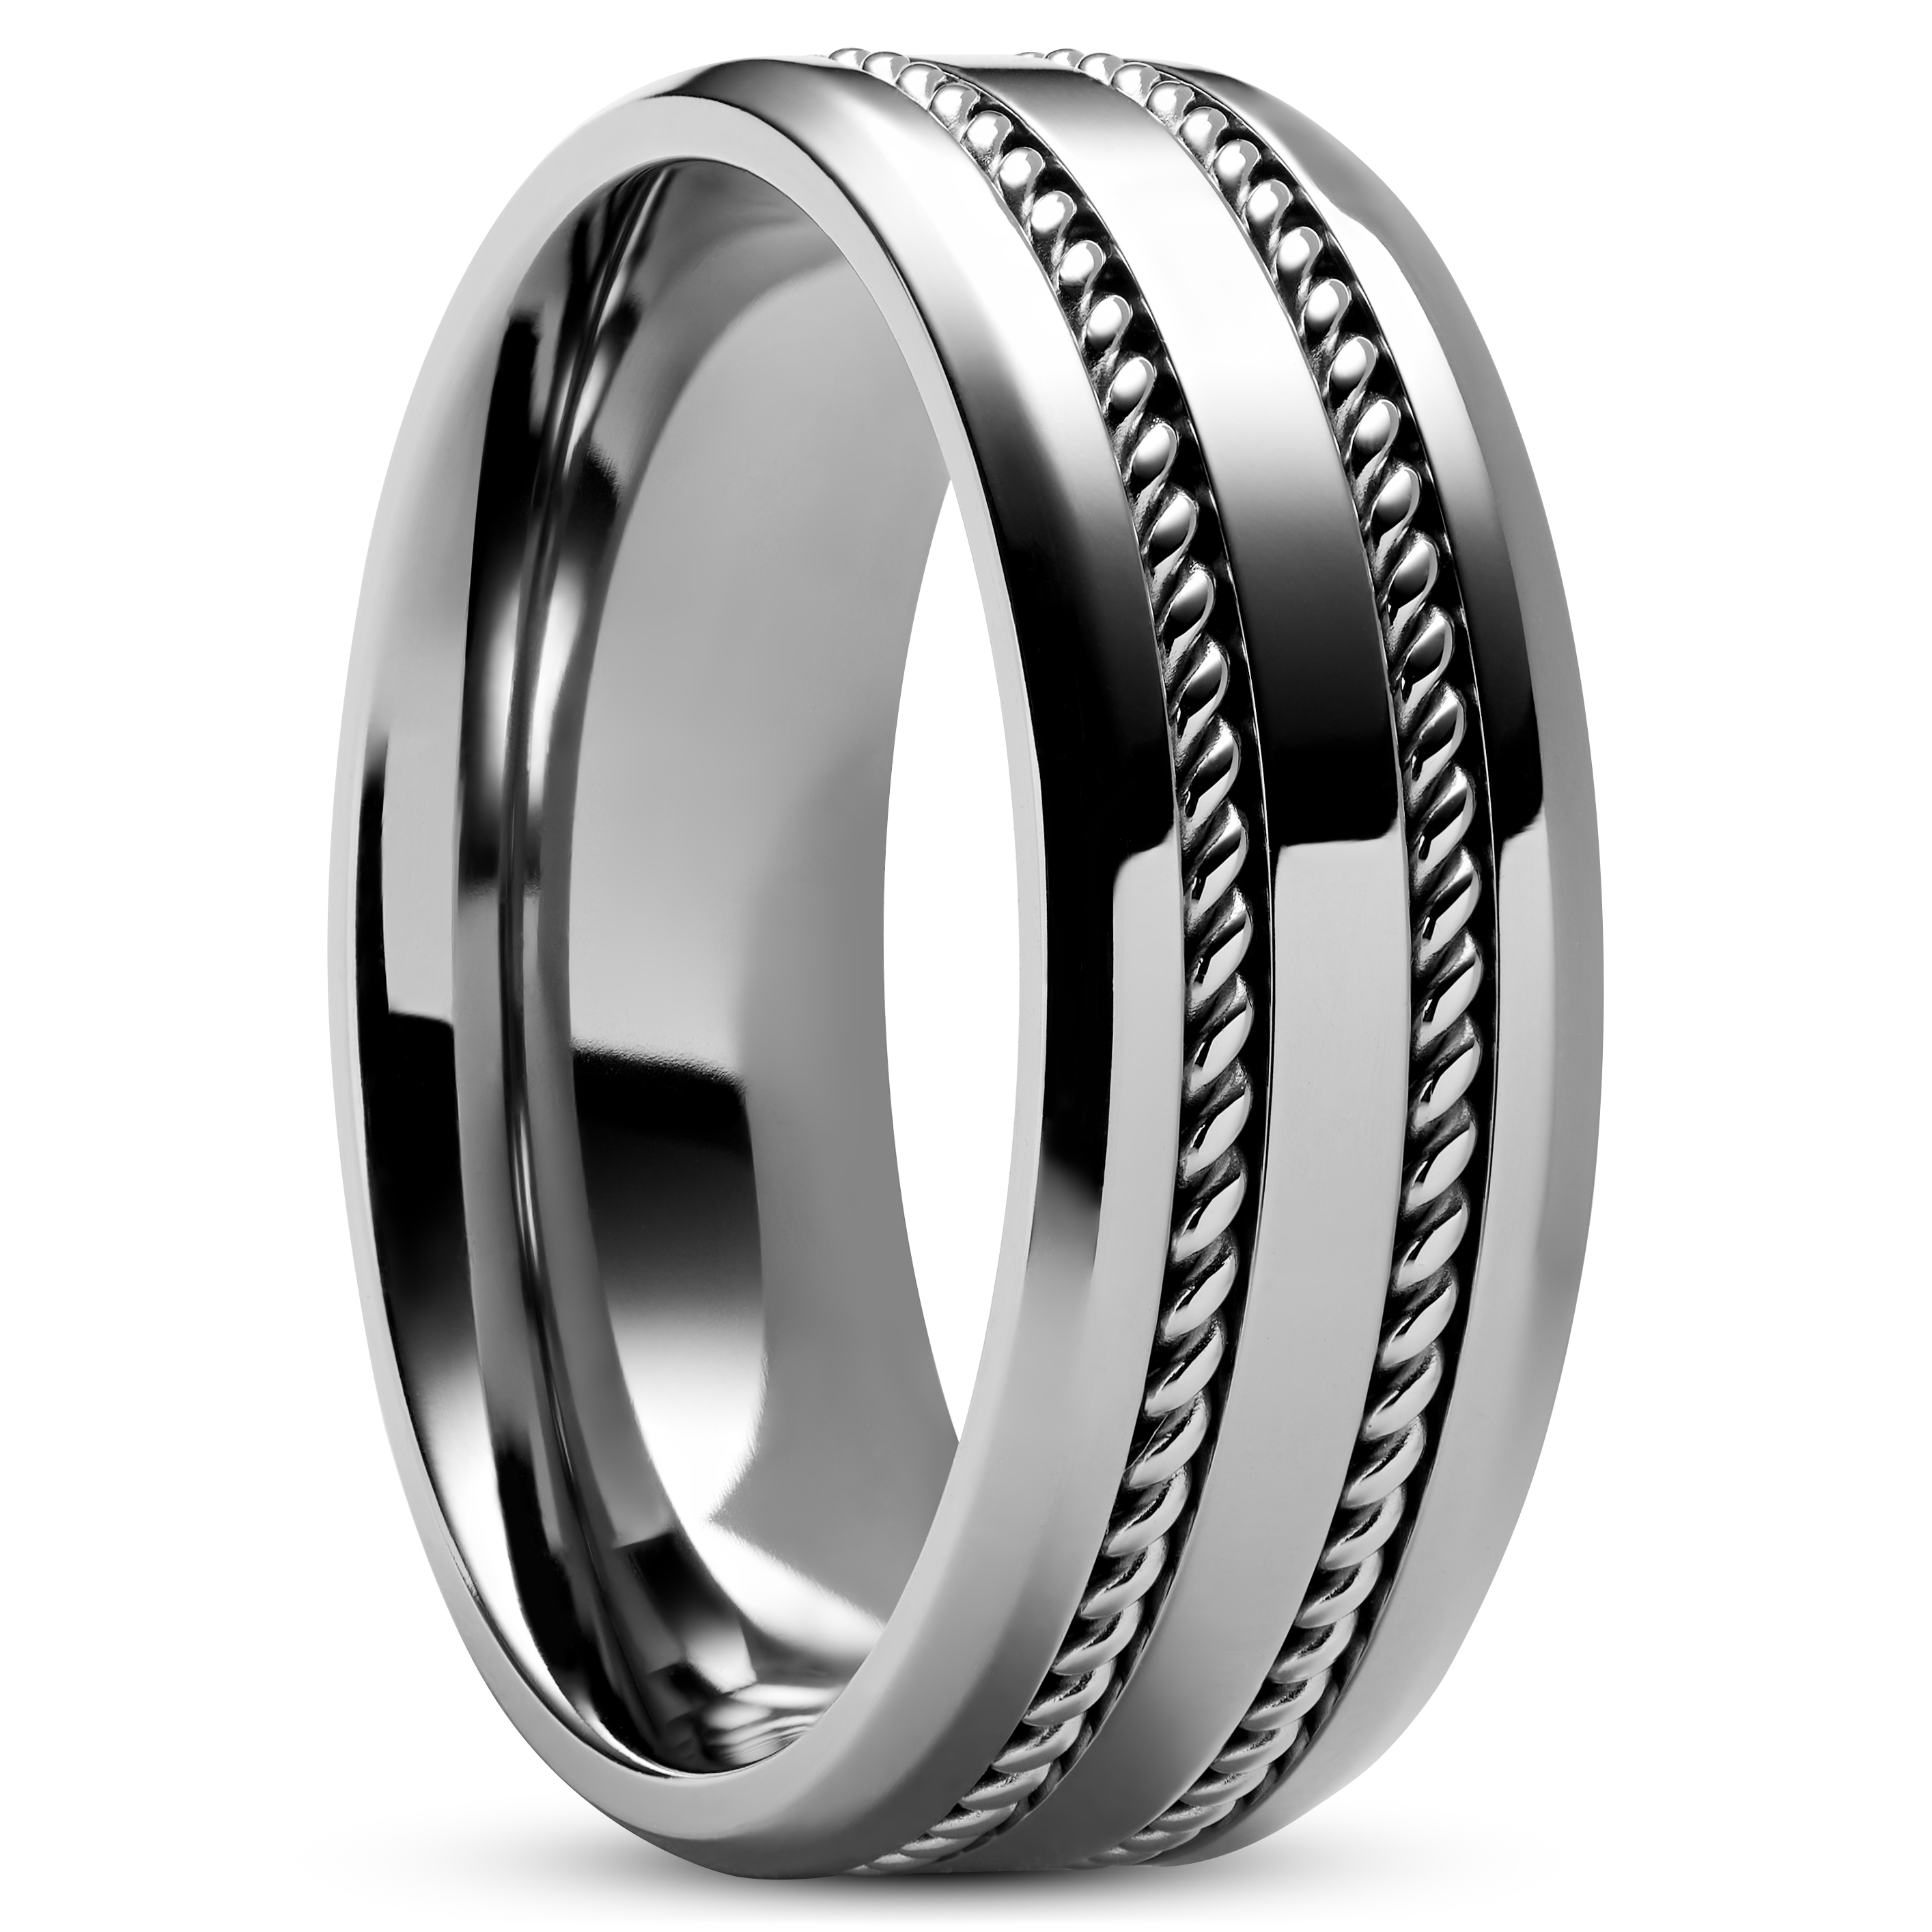 8mm Black Titanium Men's Wedding Ring Band with Genuine Koa Wood Inlay |  eBay